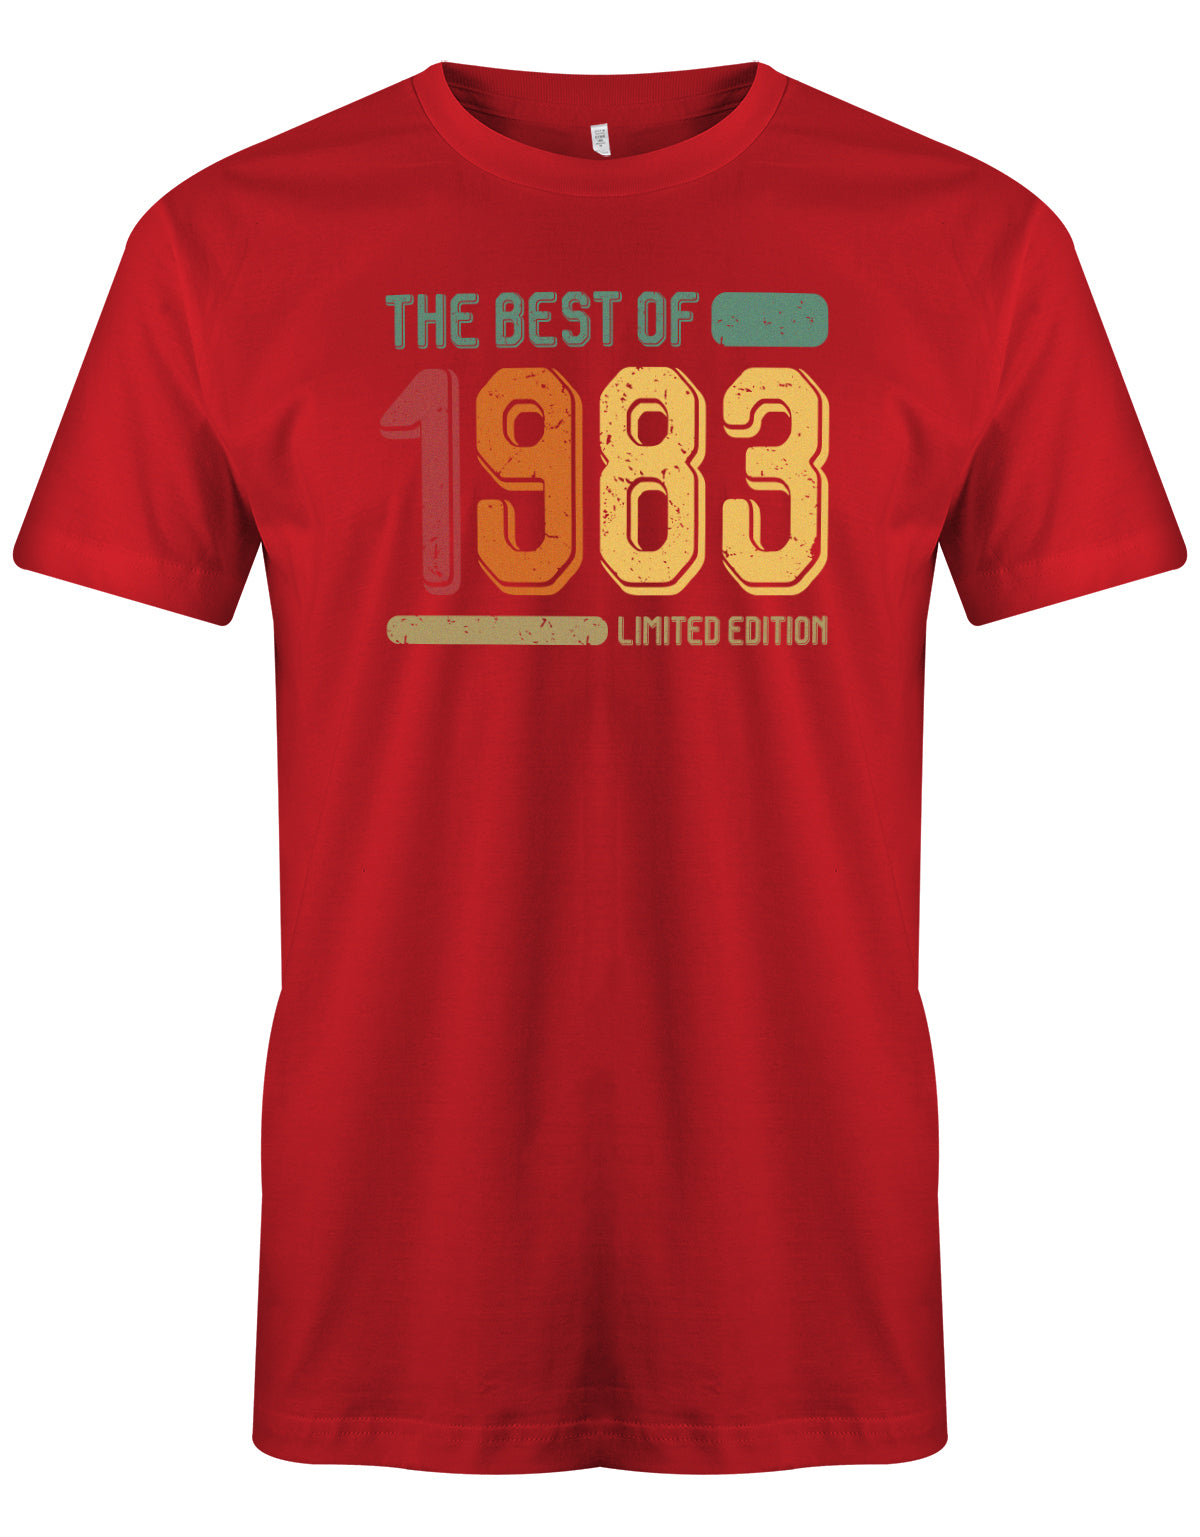 The best of 1983 Limited Edition Vintage TShirt - T-Shirt 40 Geburtstag Männer myShirtStore Rot